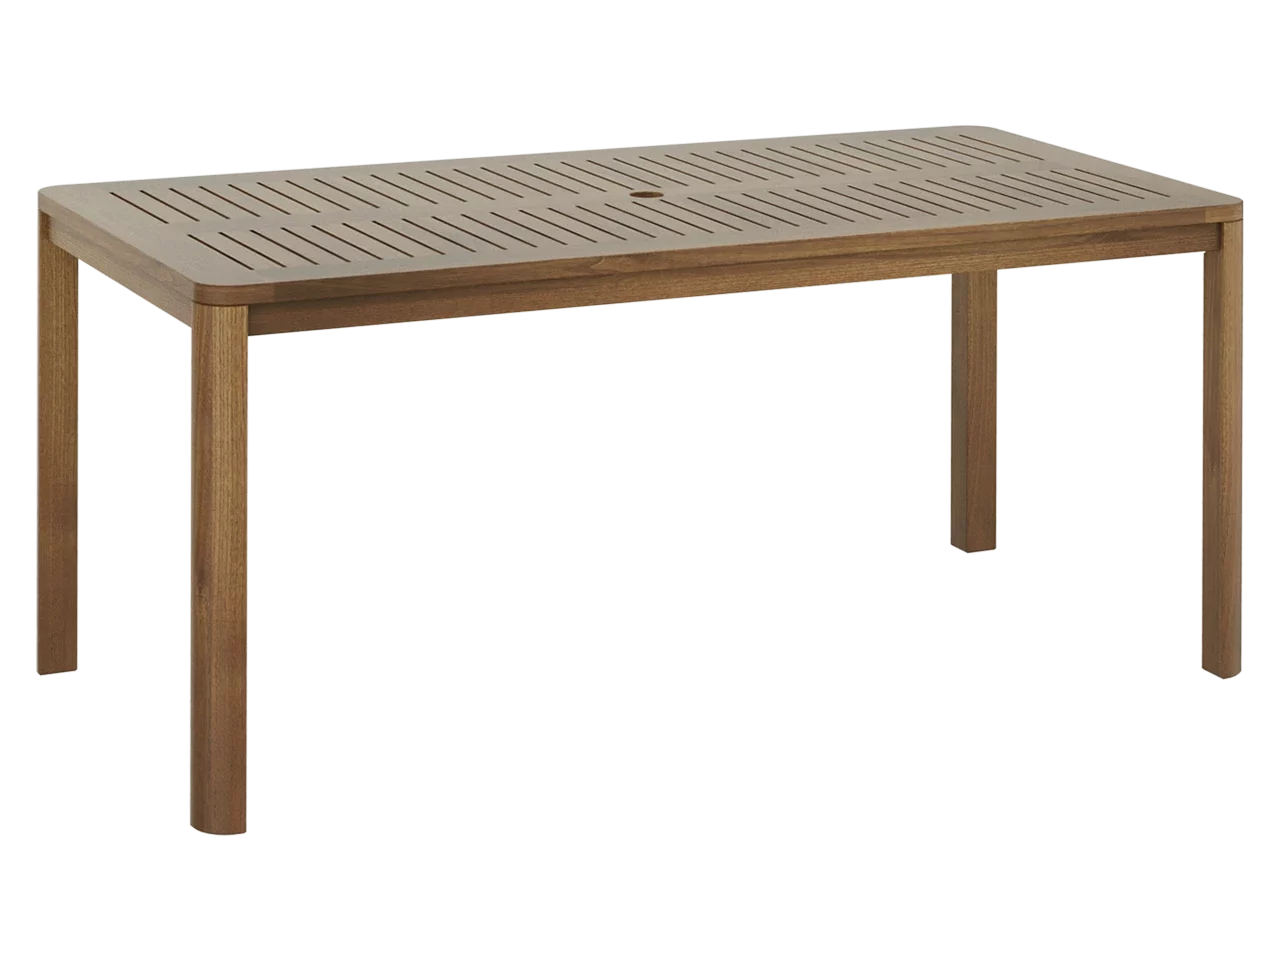 Bolney Table 1.6m x 0.8m